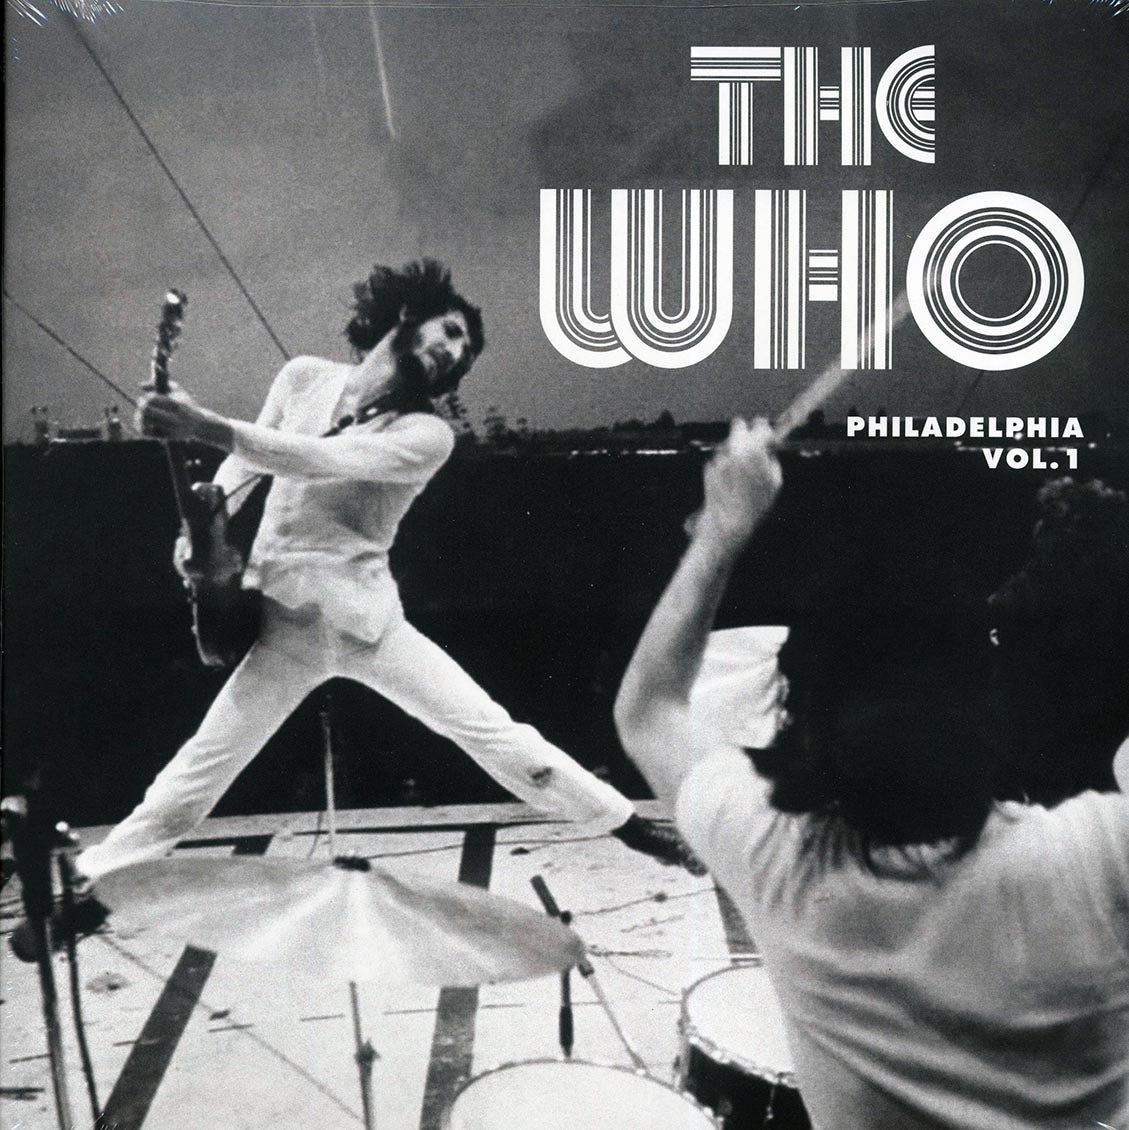 The Who - Philadelphia Volume 1: 1973 Broadcast Quadrophenia Tour (2xLP) - Vinyl LP